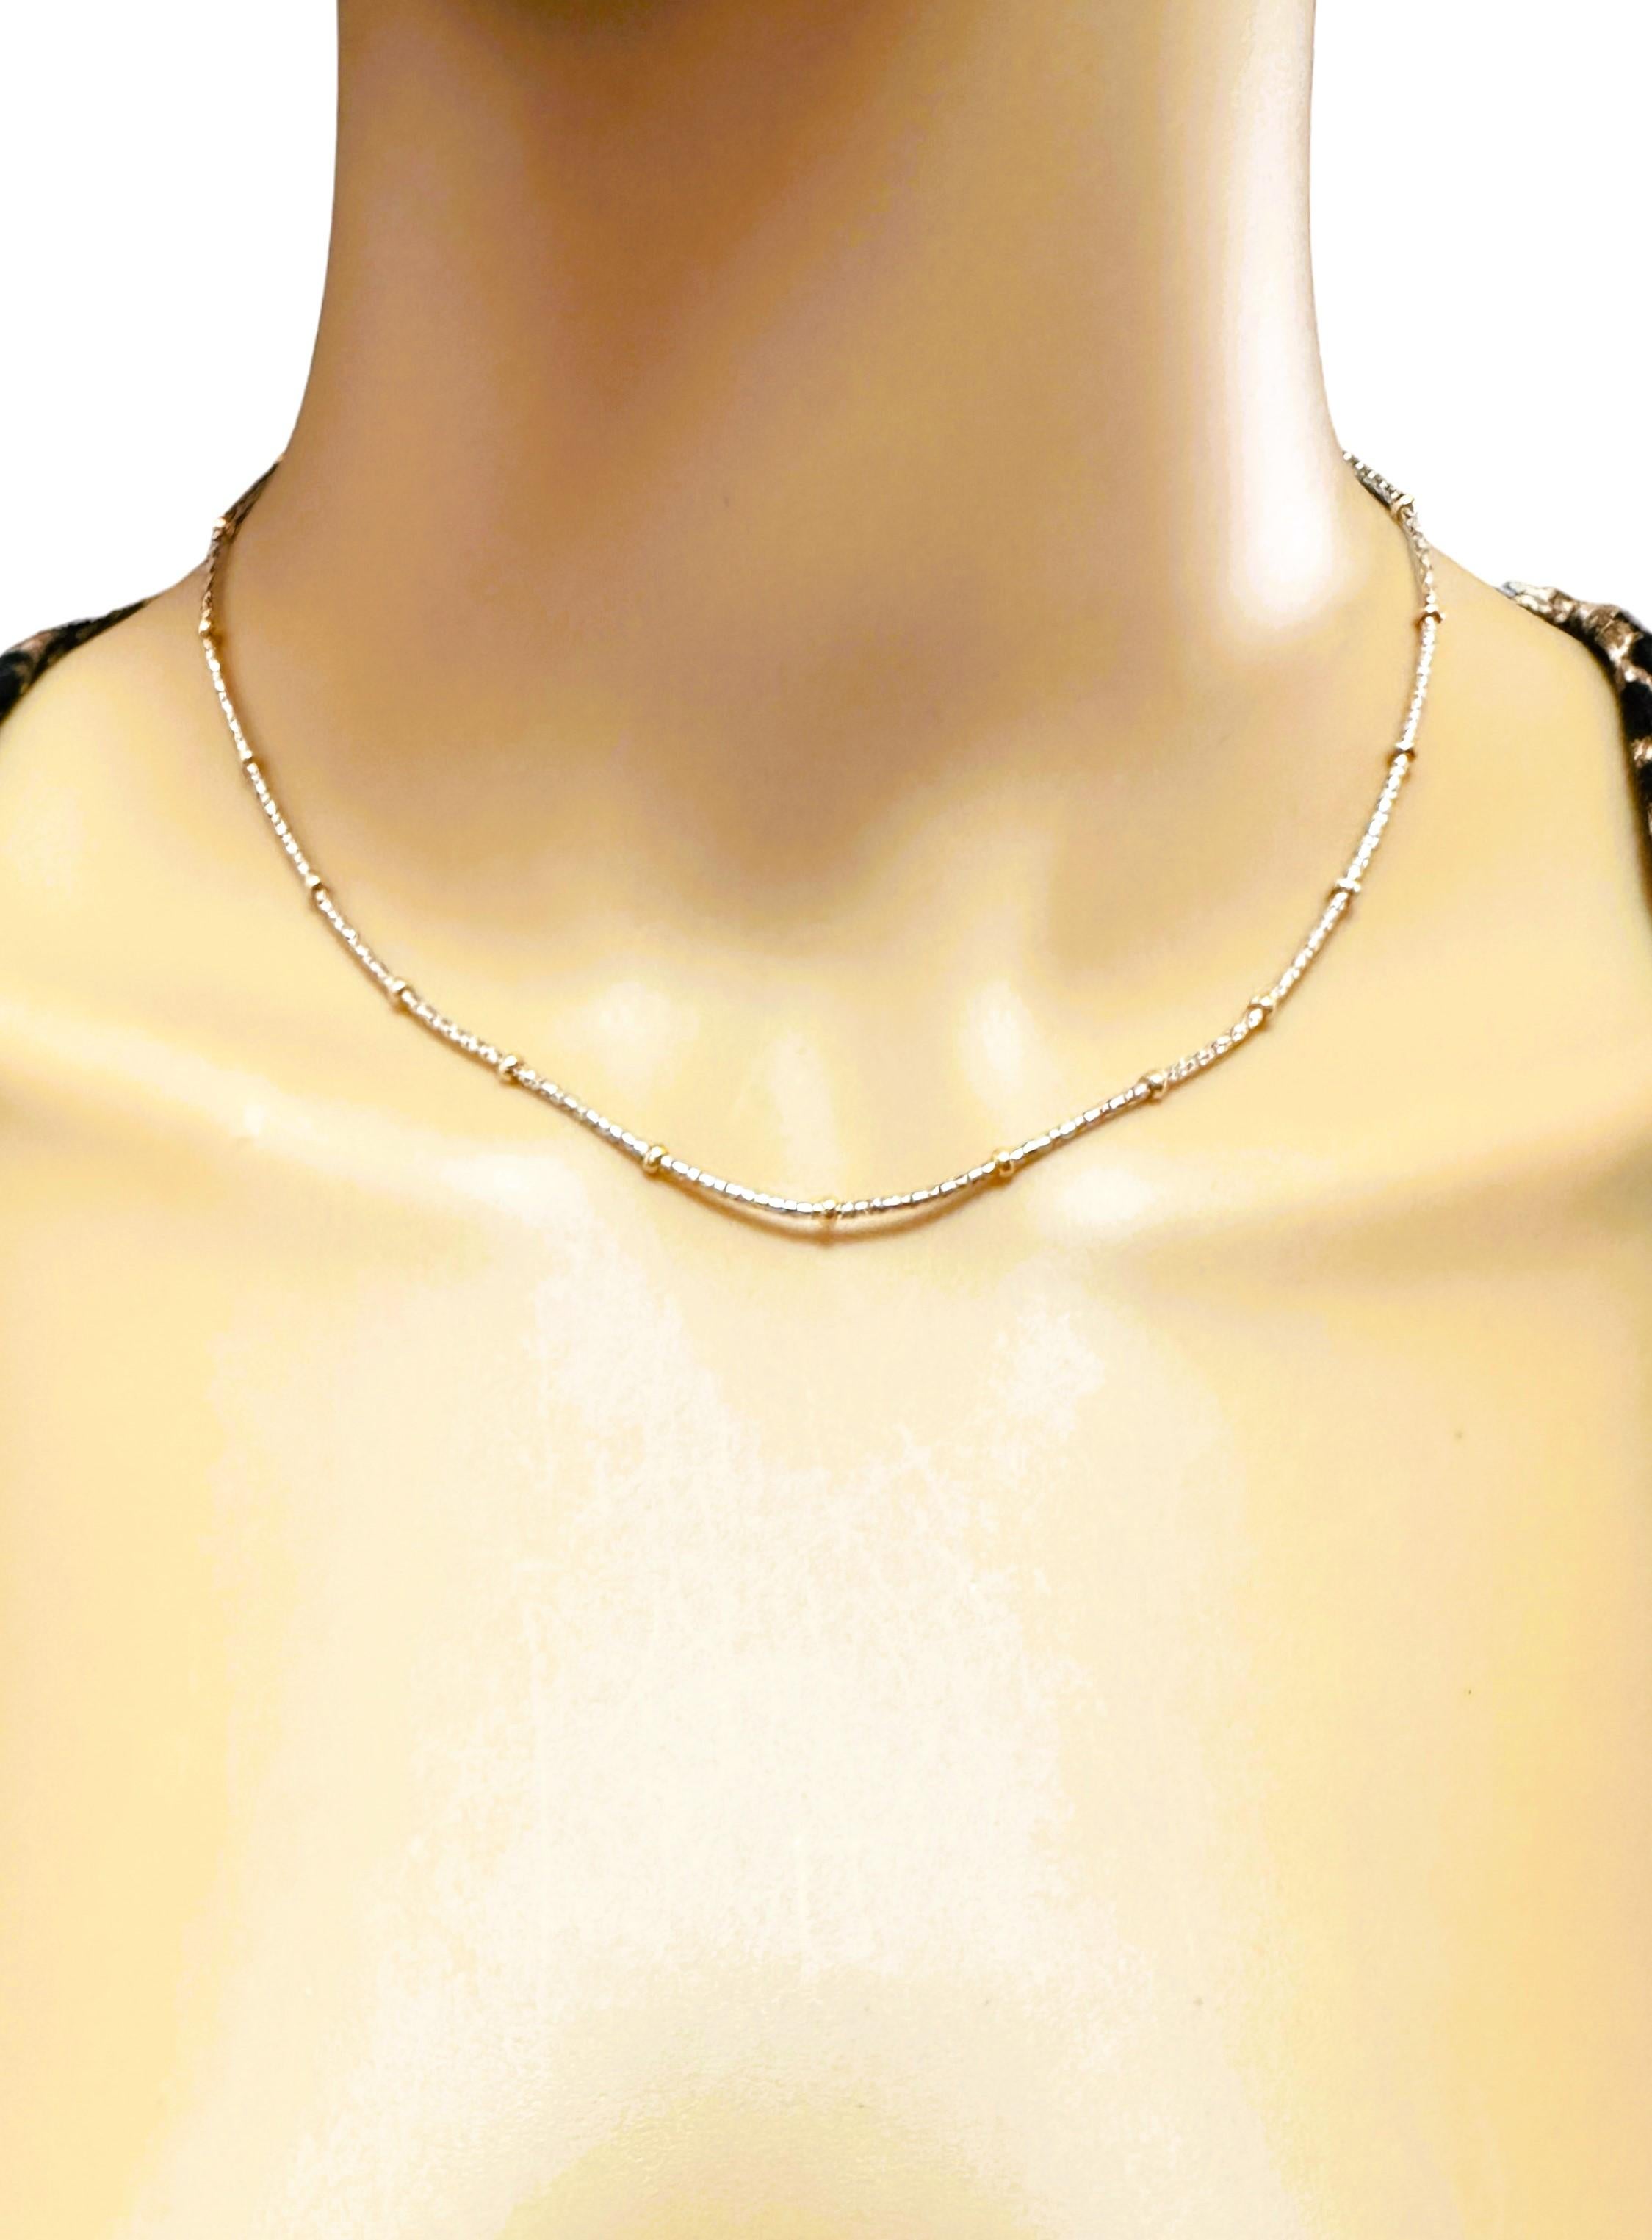 kitsinian 14k necklace